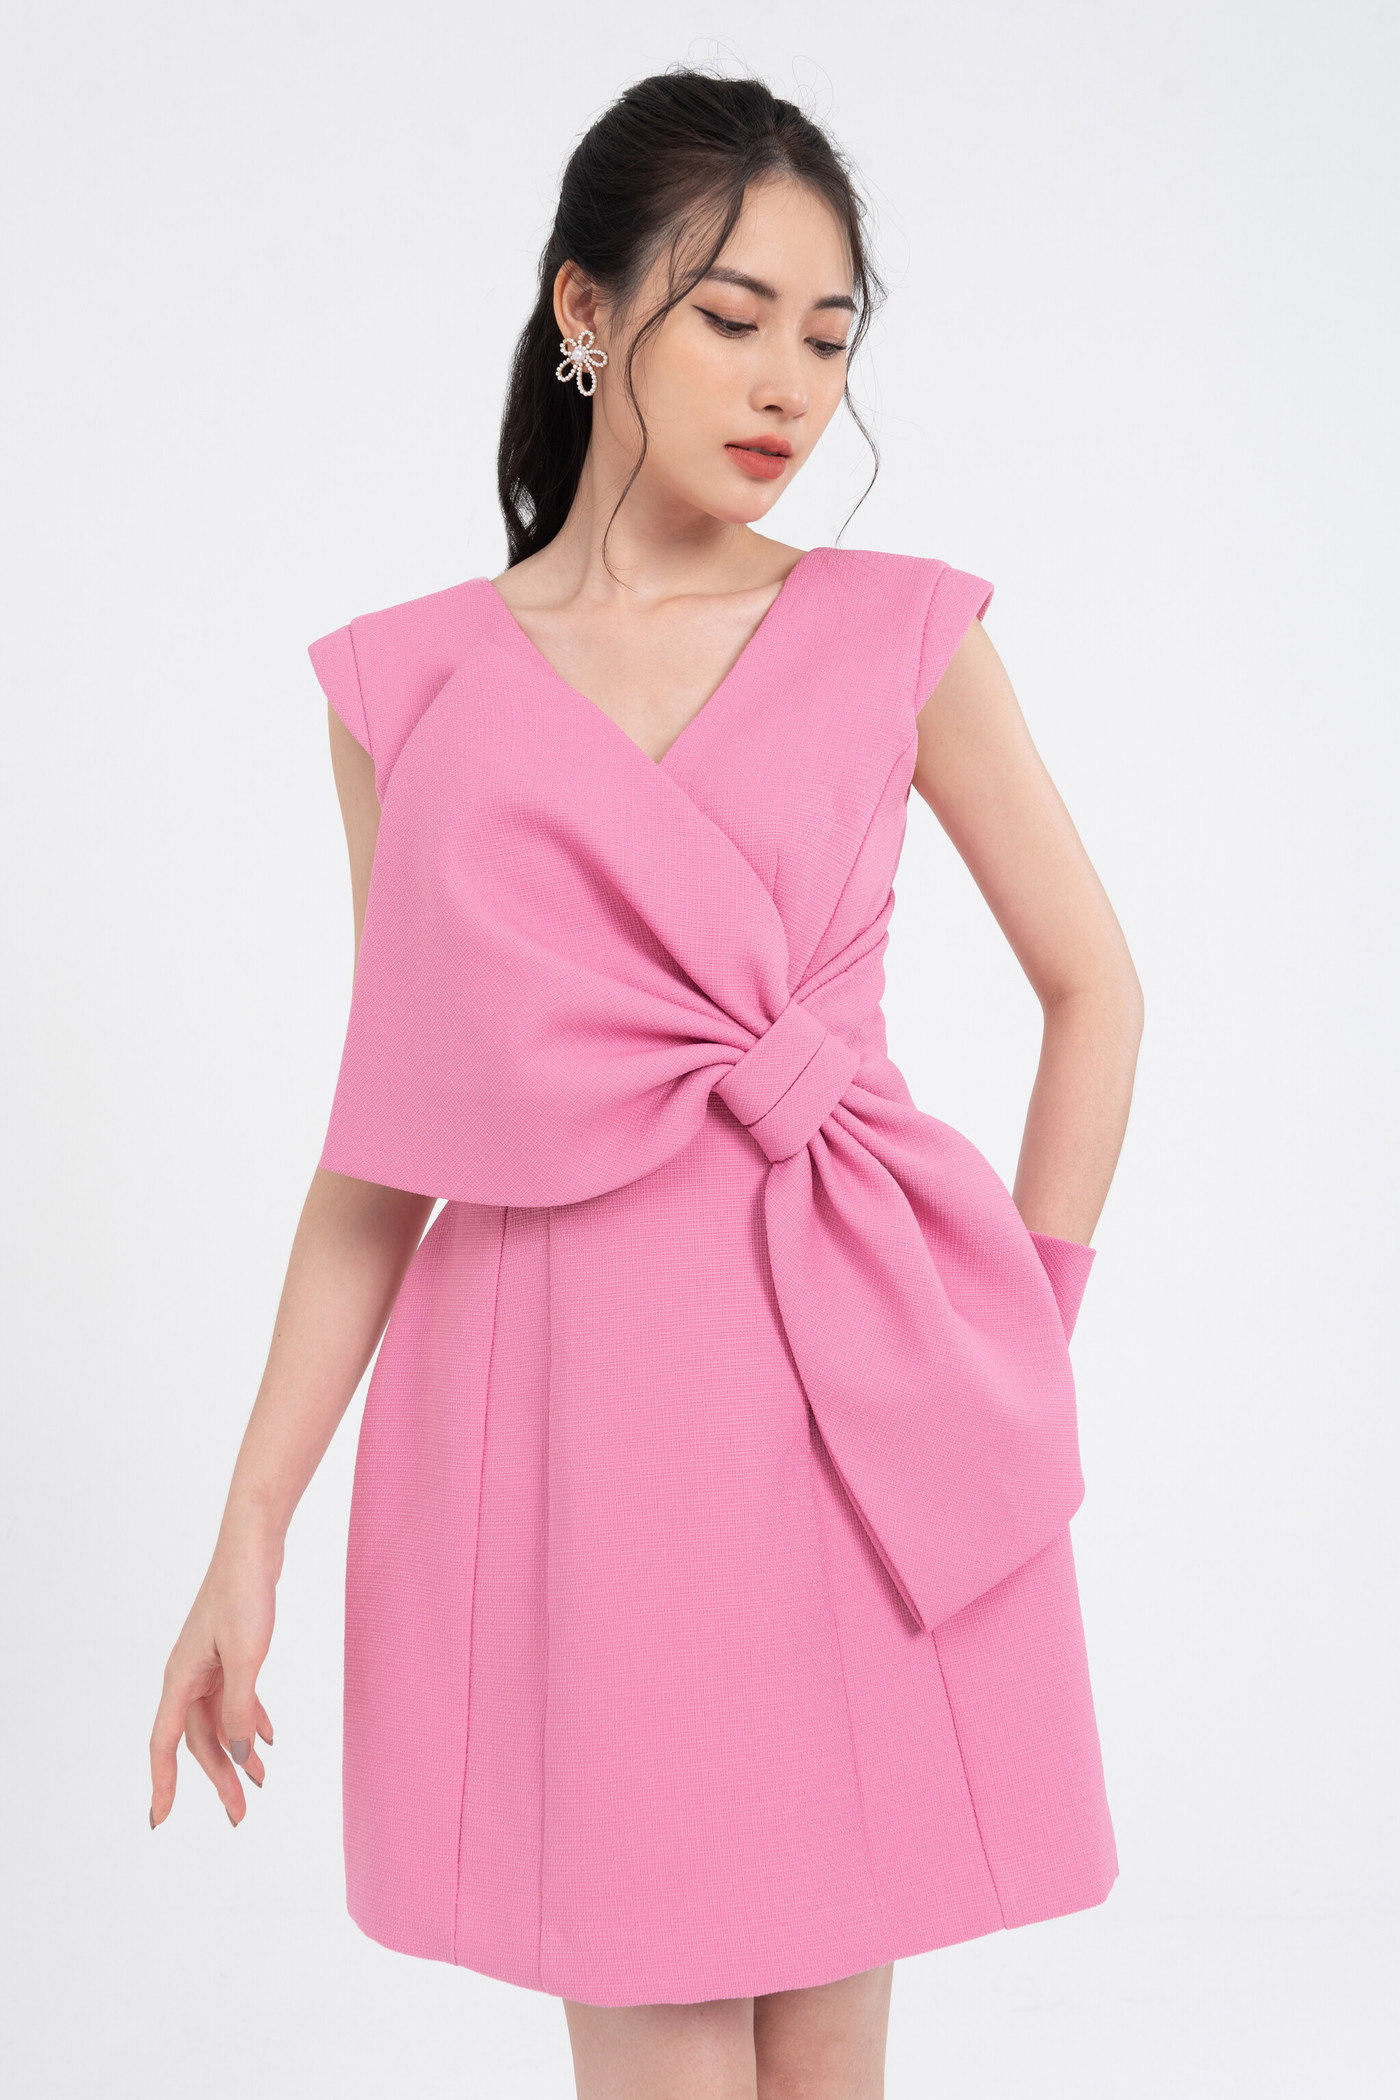 tweed dress with bow - Đầm tweed phối nơ 